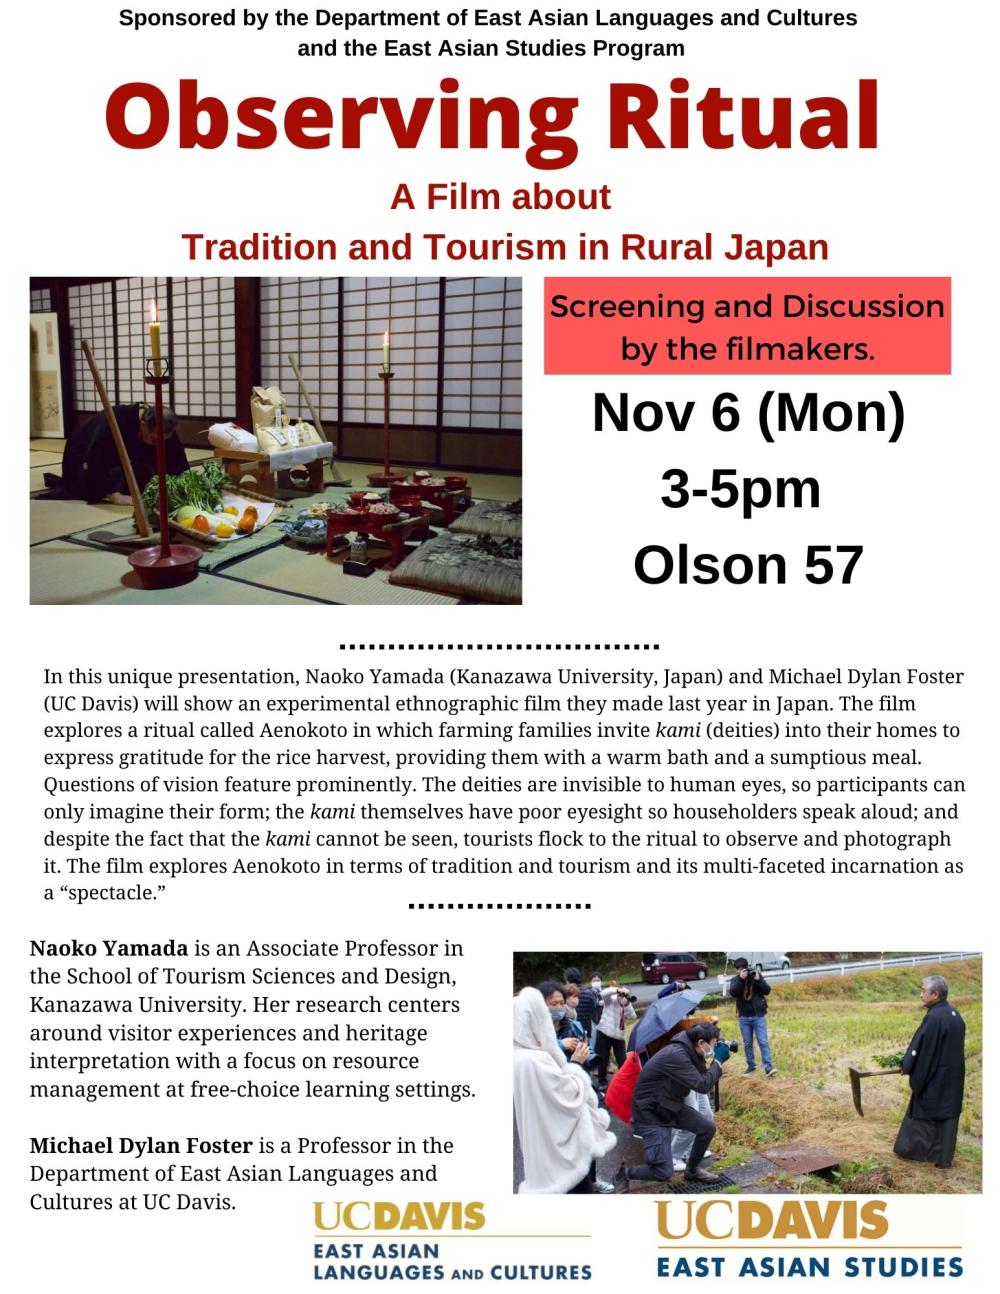 Observing Ritual screening Nov 6, 3-35 in Olson 57